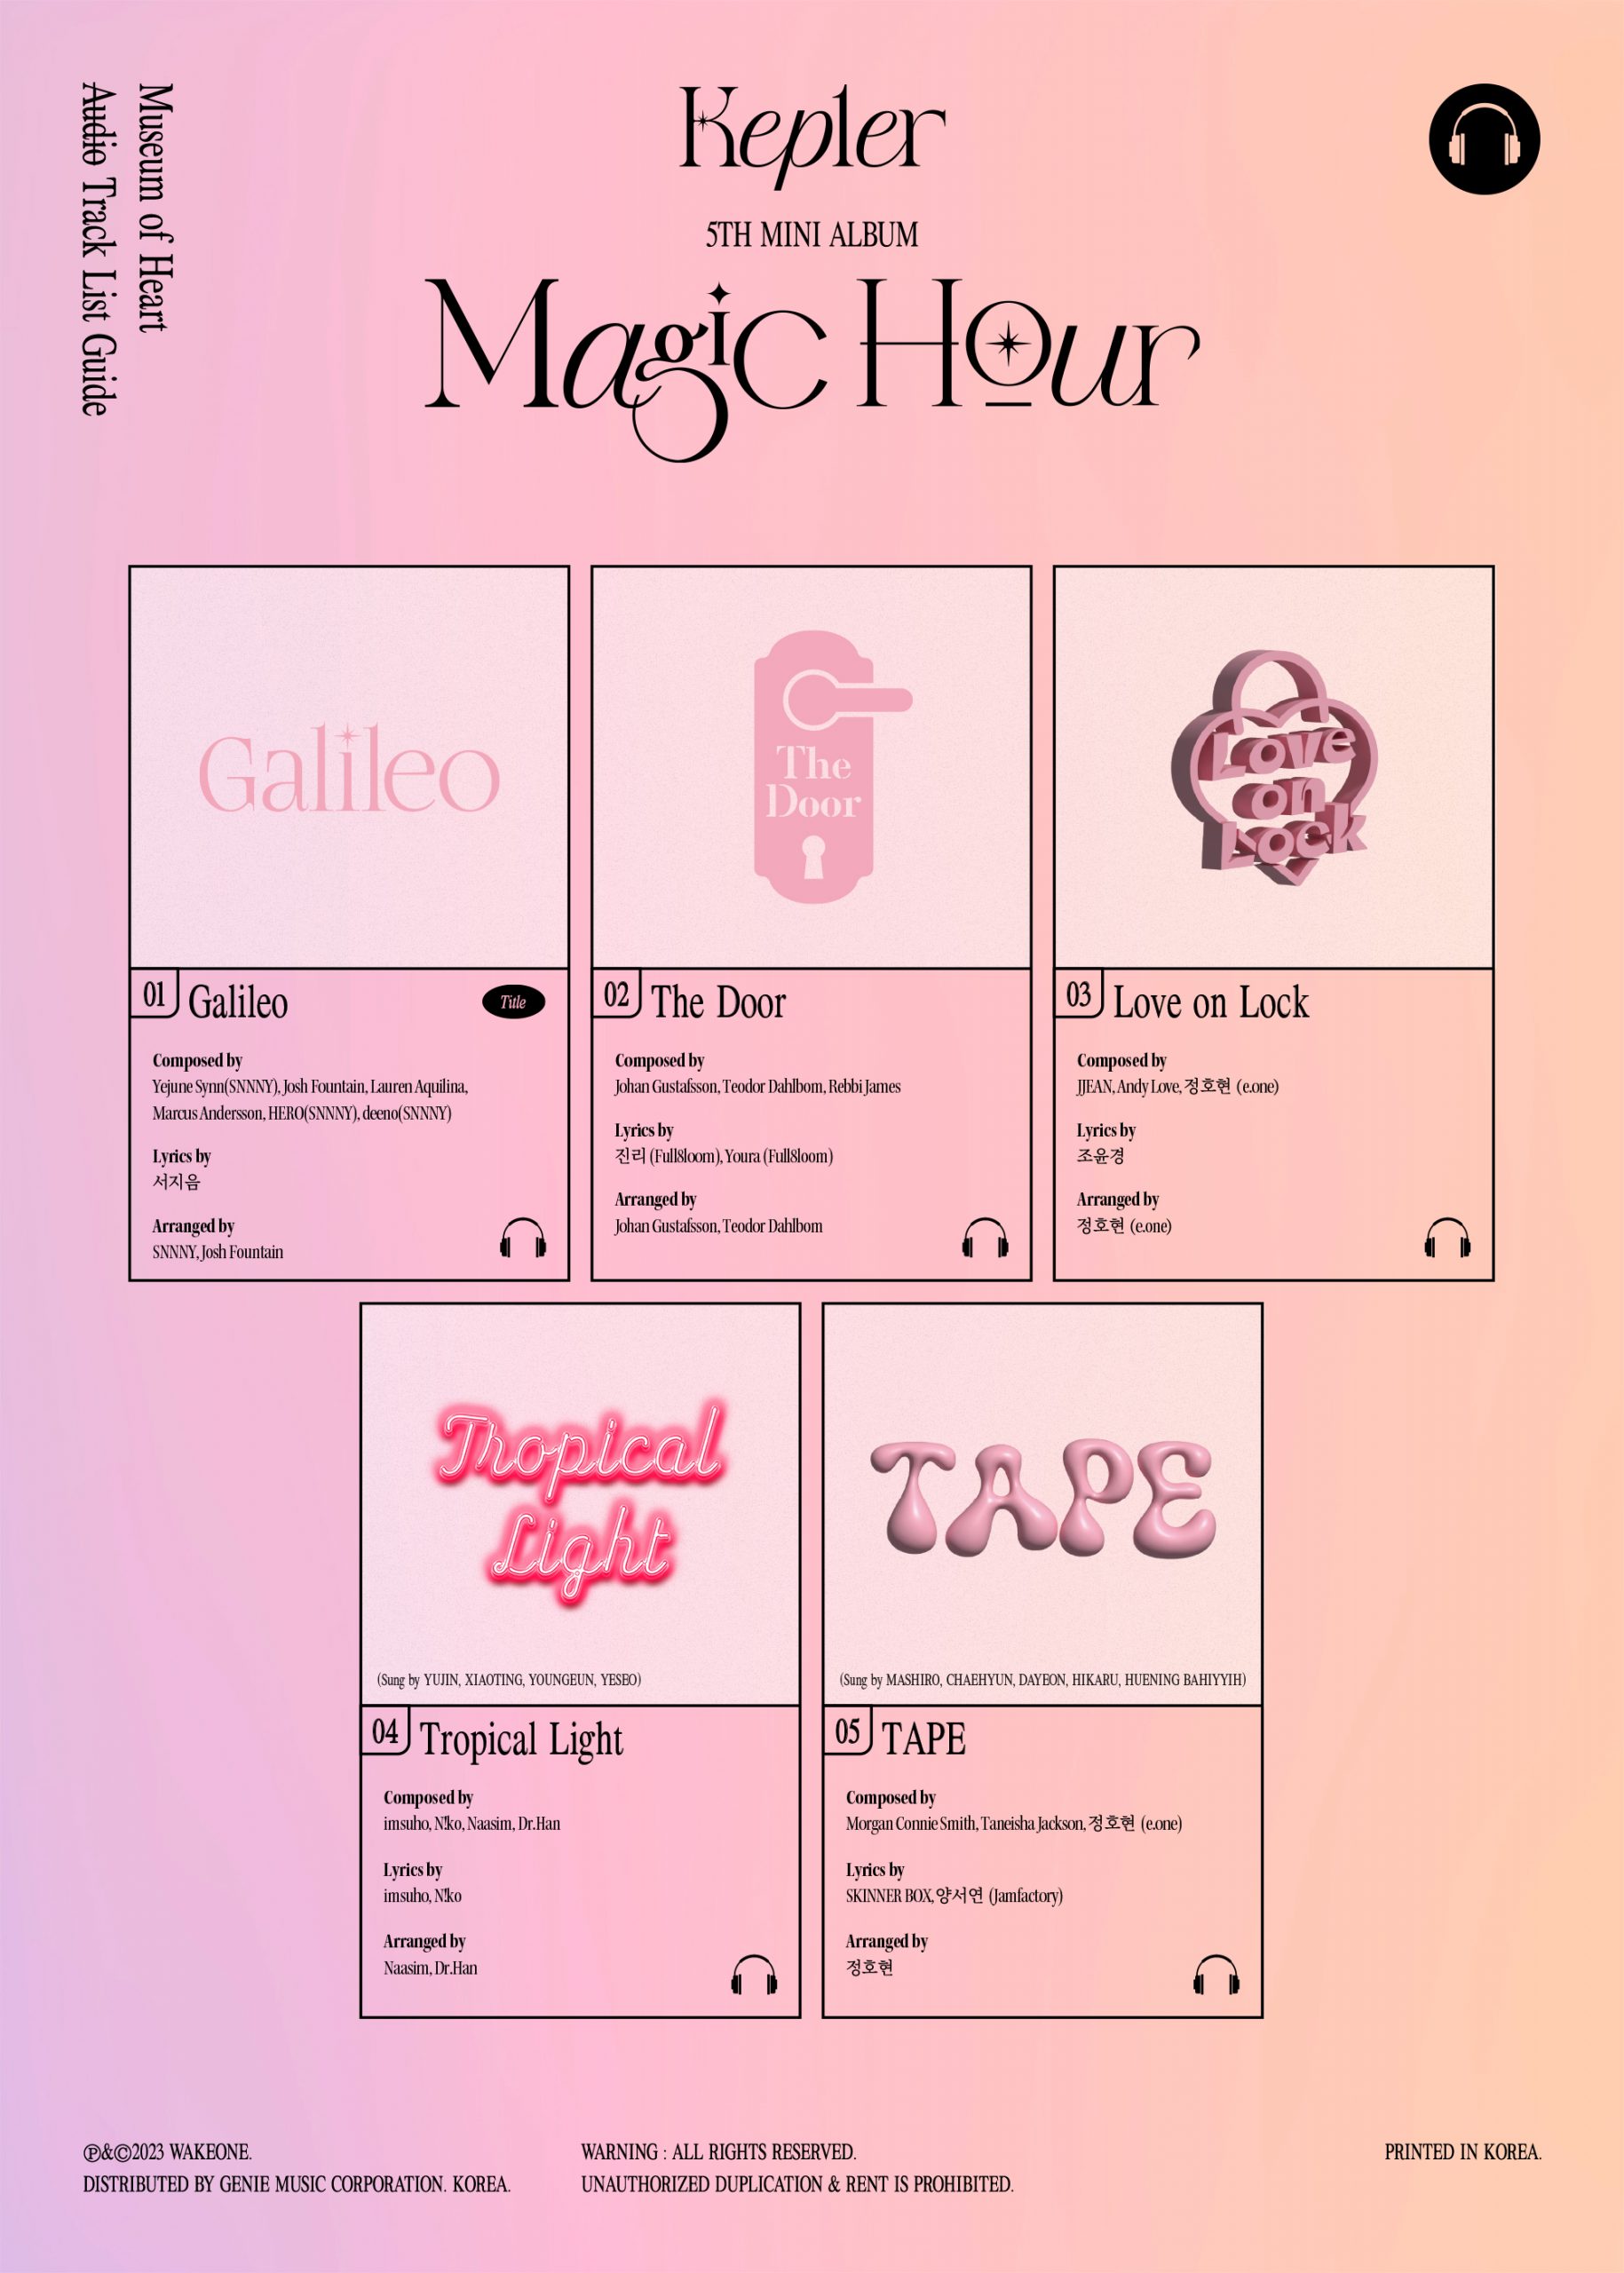 Kep1er официально представили трек-лист пятого мини-альбома "Magic Hour"